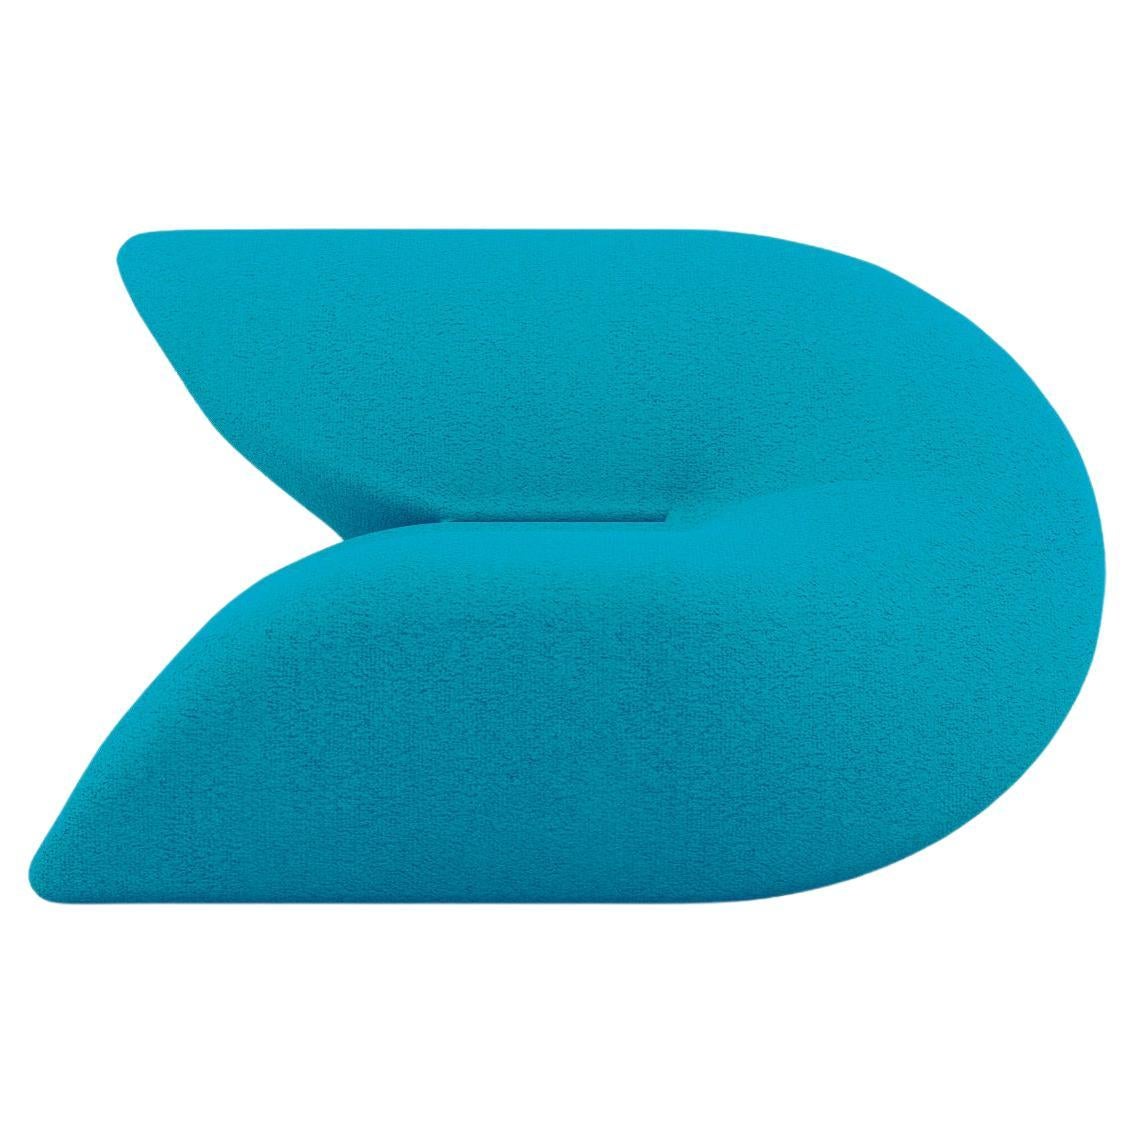 Delta Armchair - Modern Sky Blue Upholstered Armchair For Sale